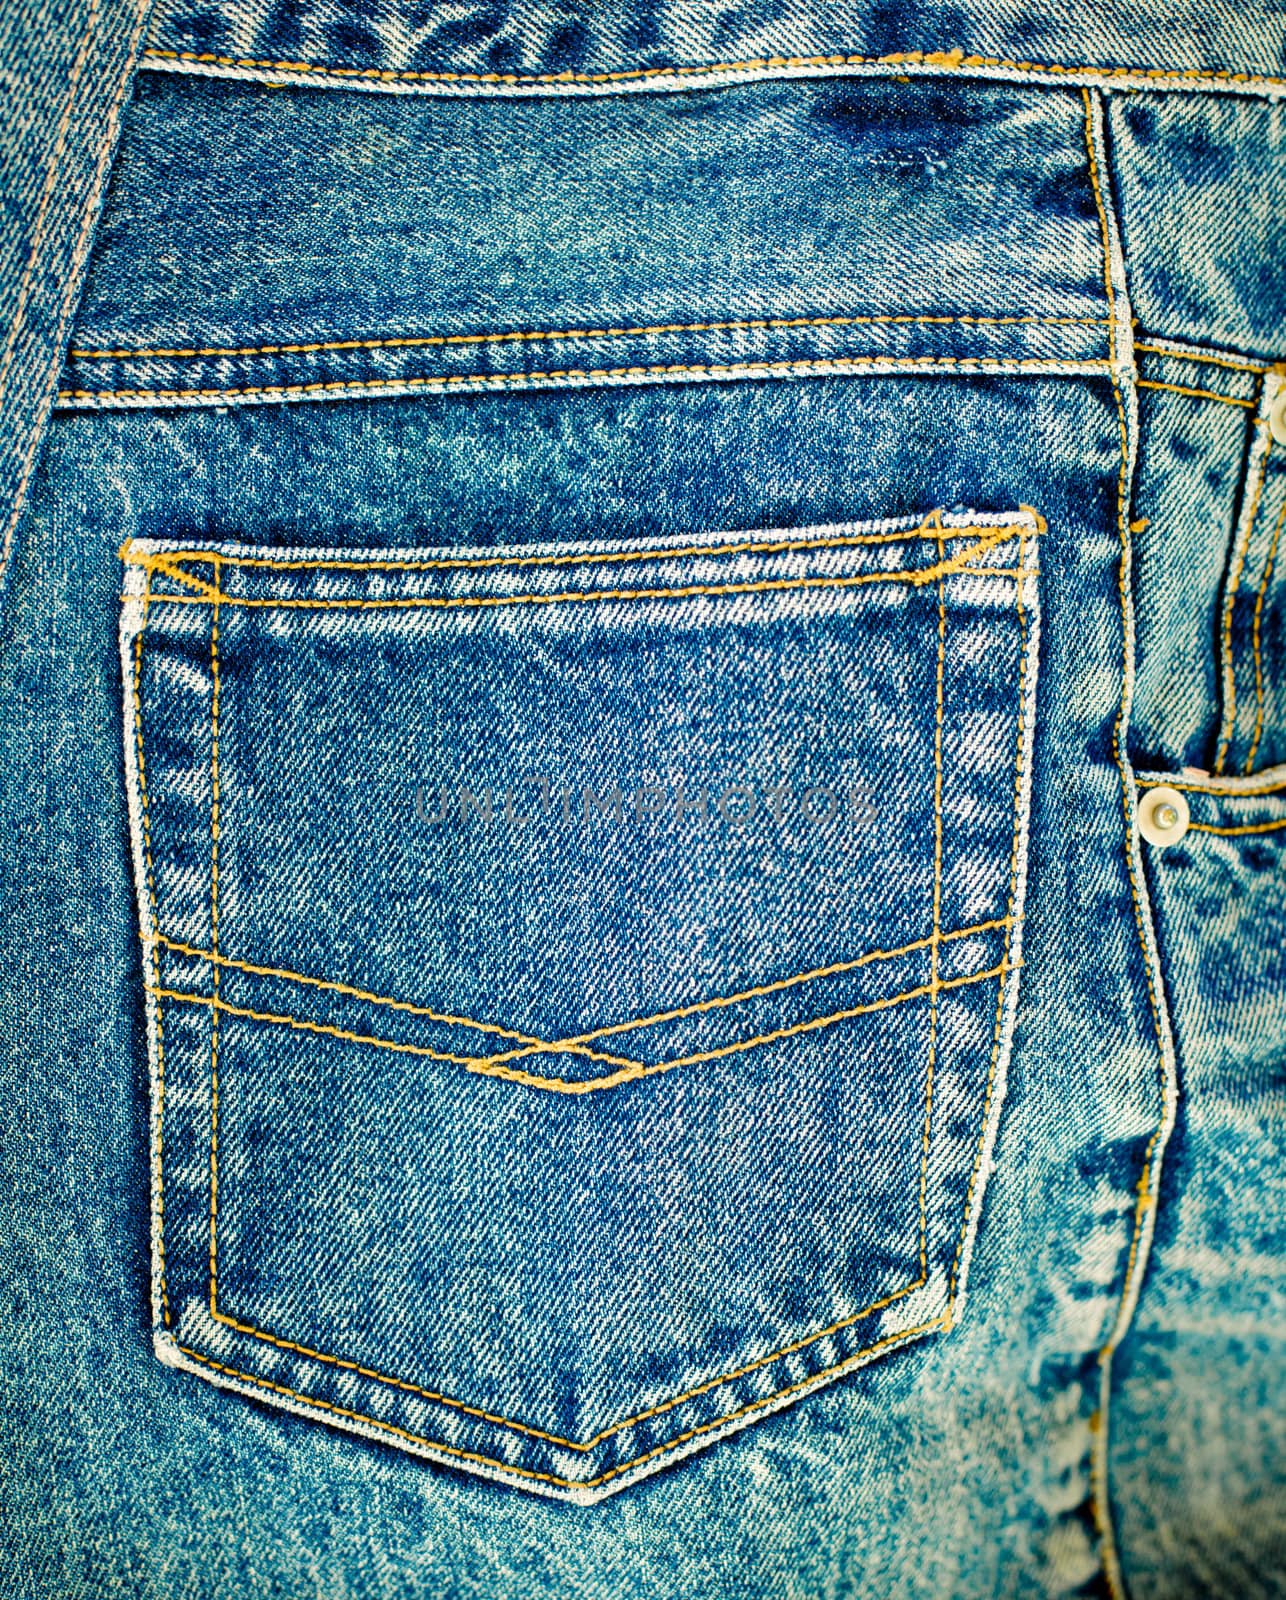 Blue jeans by naumoid